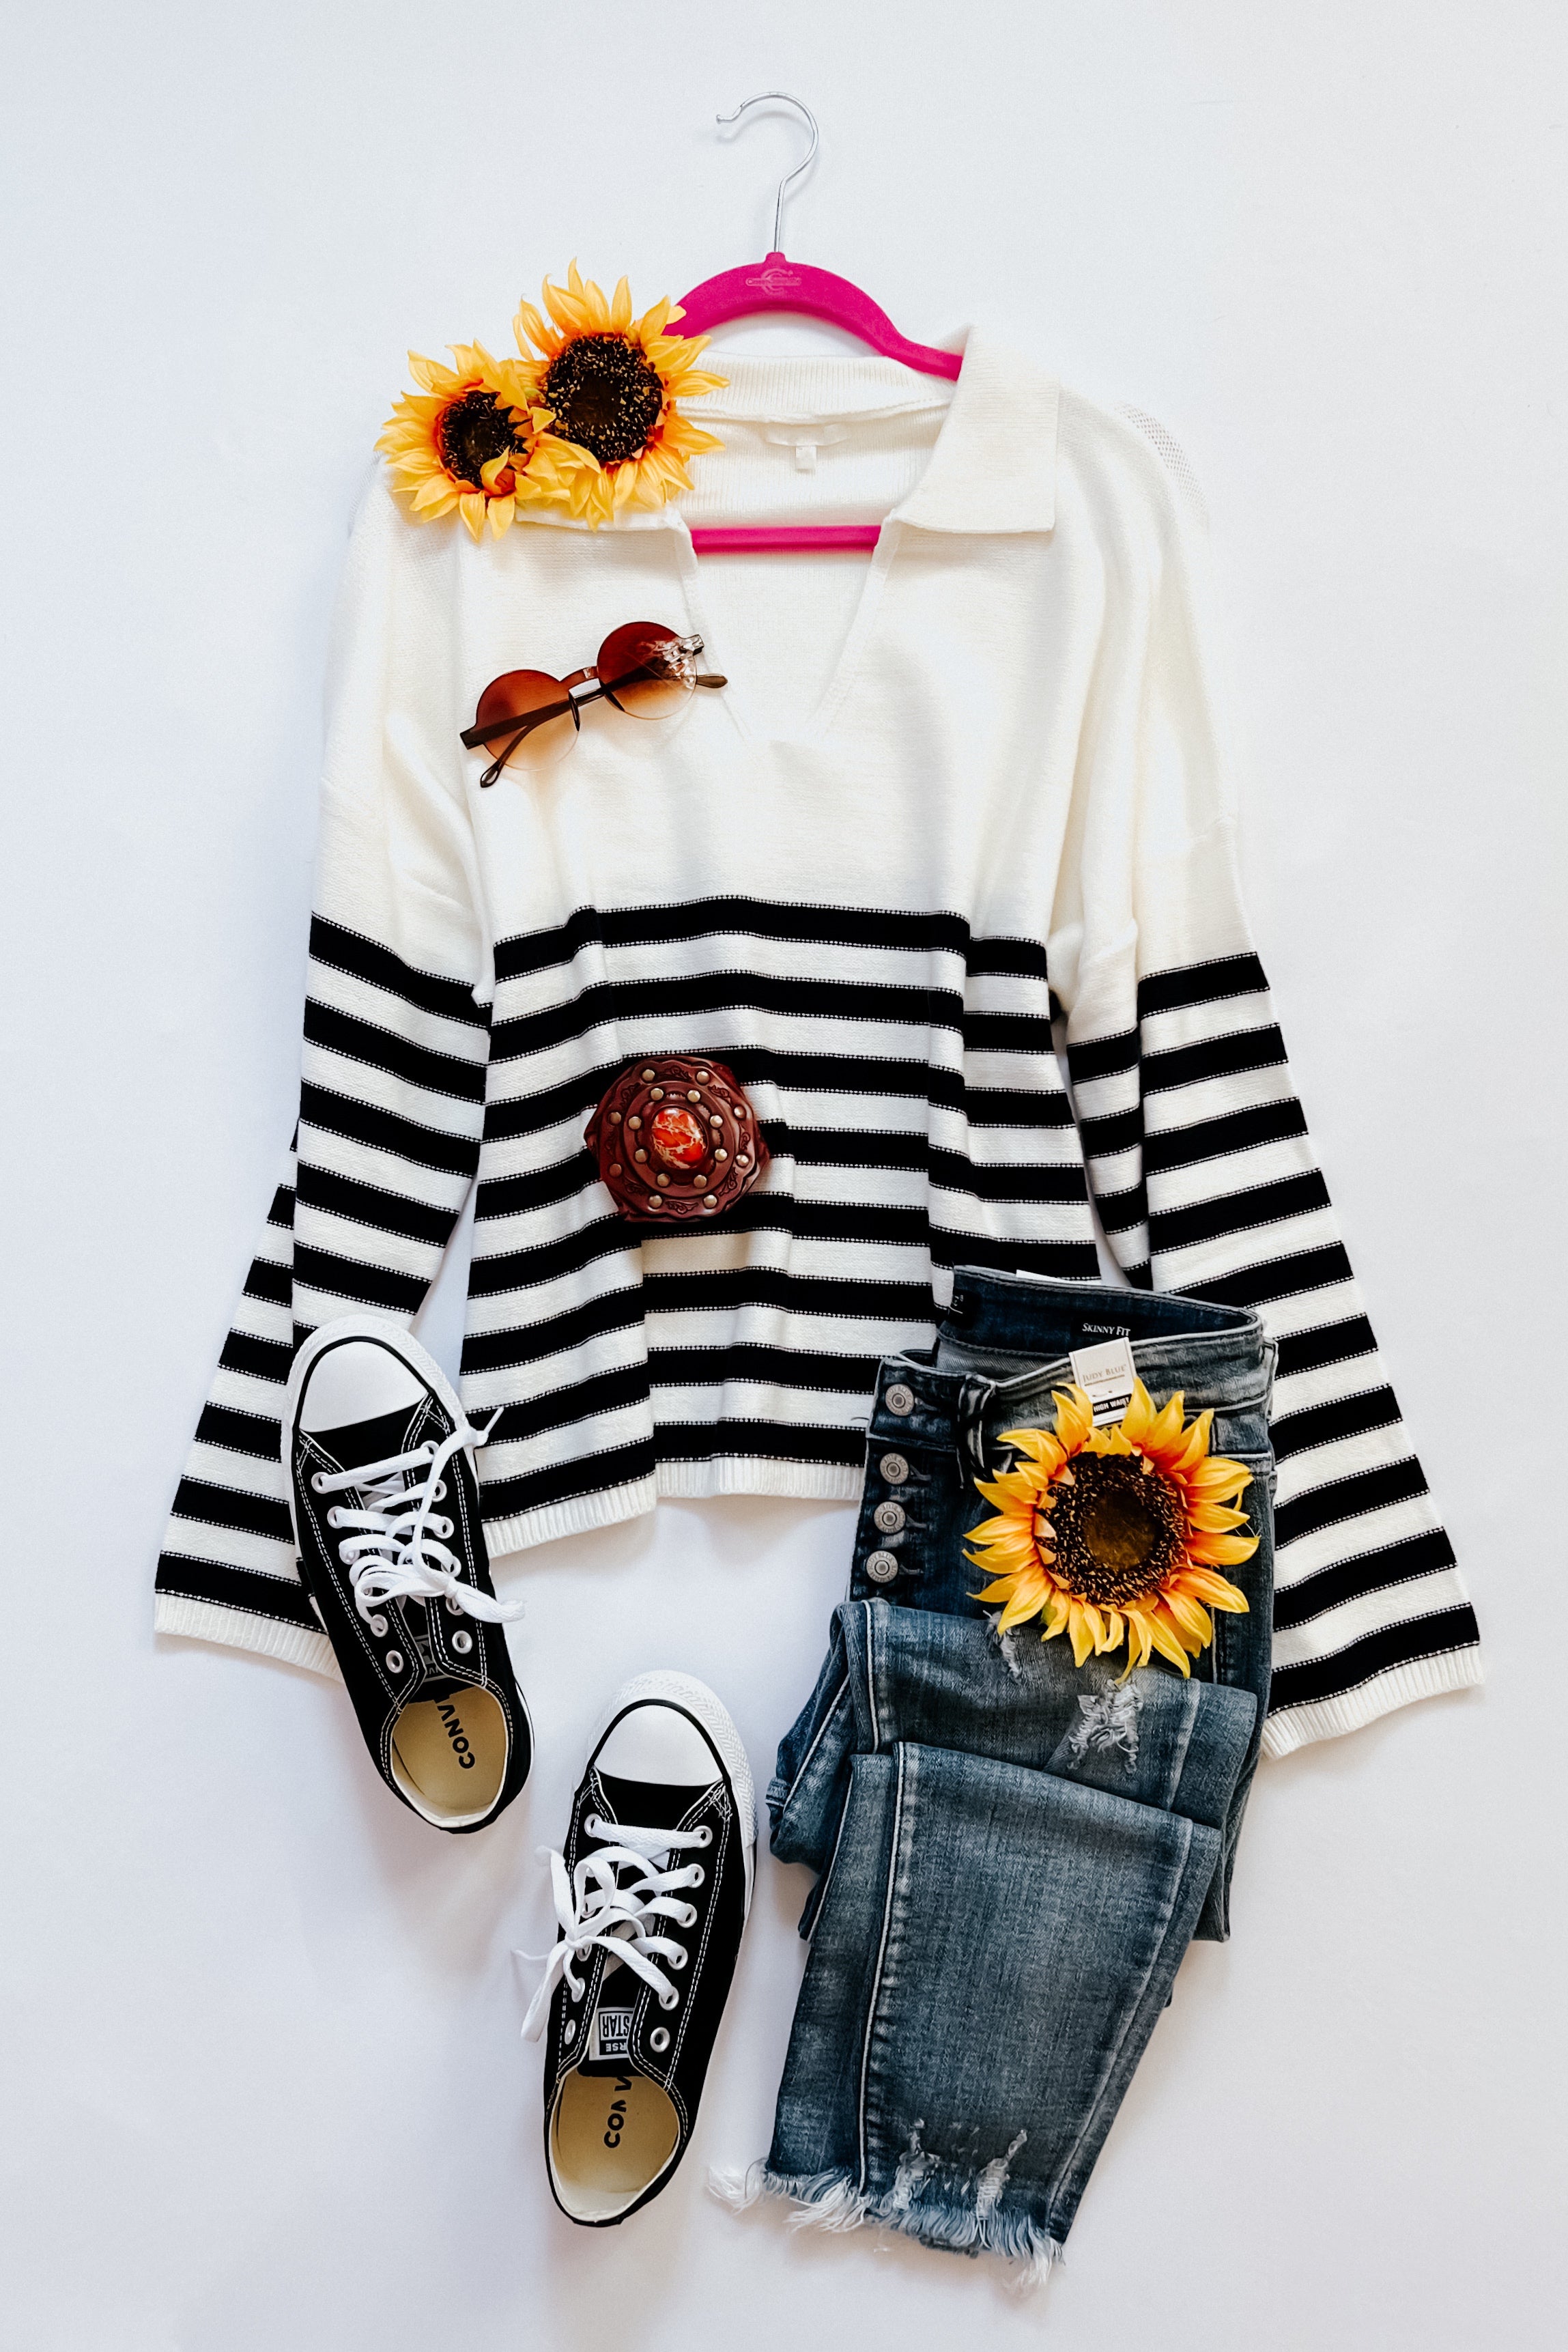 Memorable Moments Striped Sweater • White